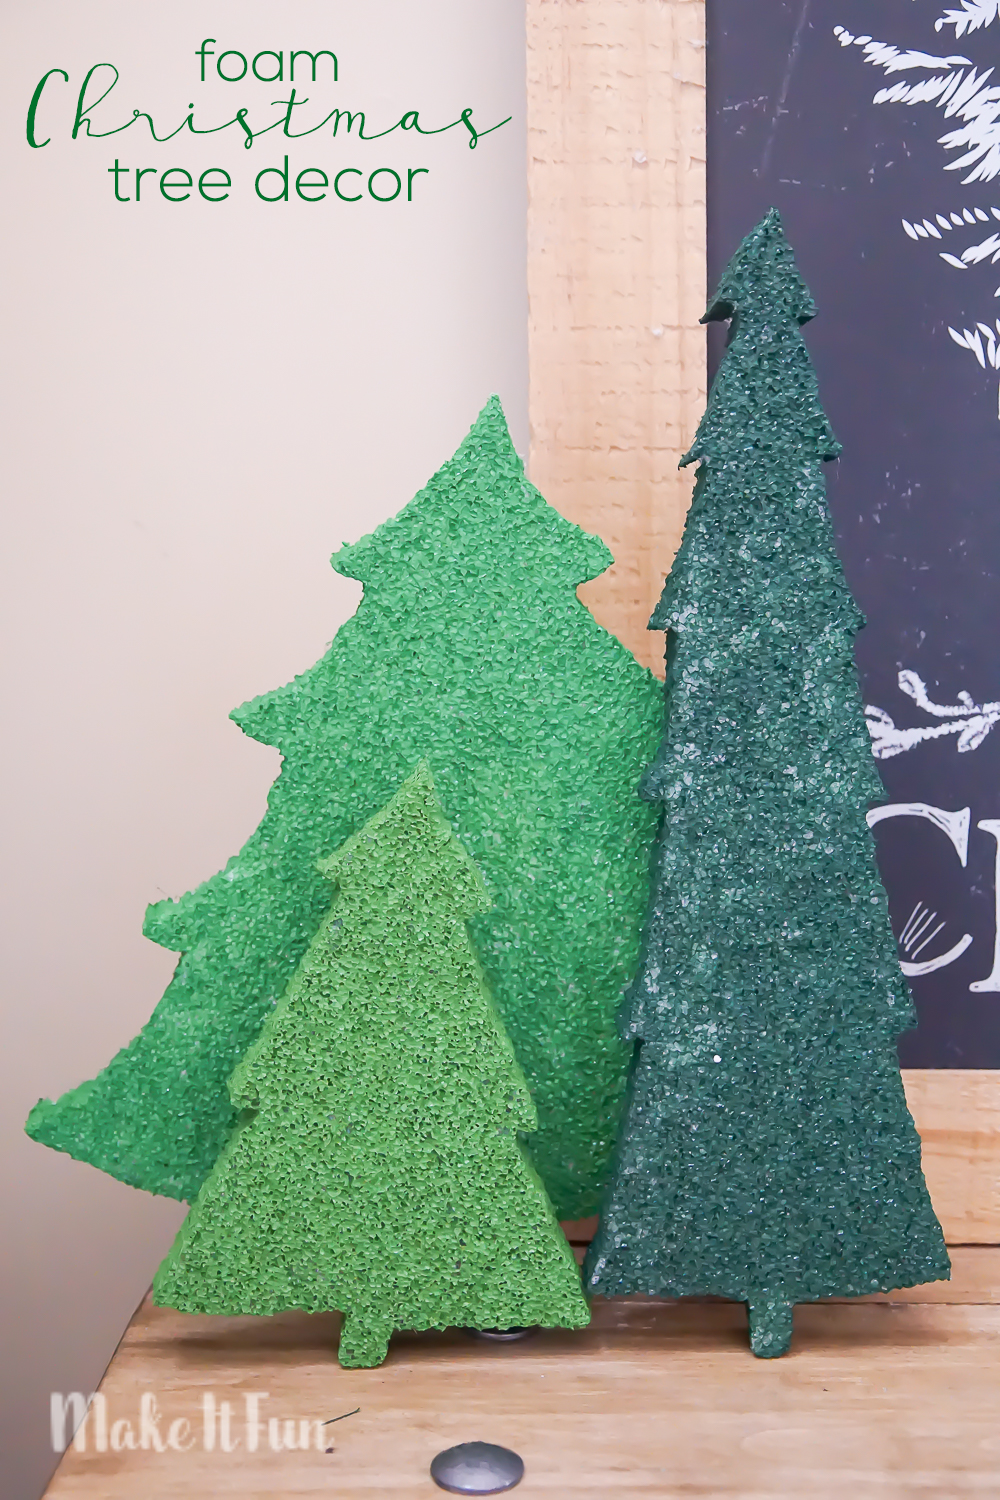 Foam Christmas Tree Decorations